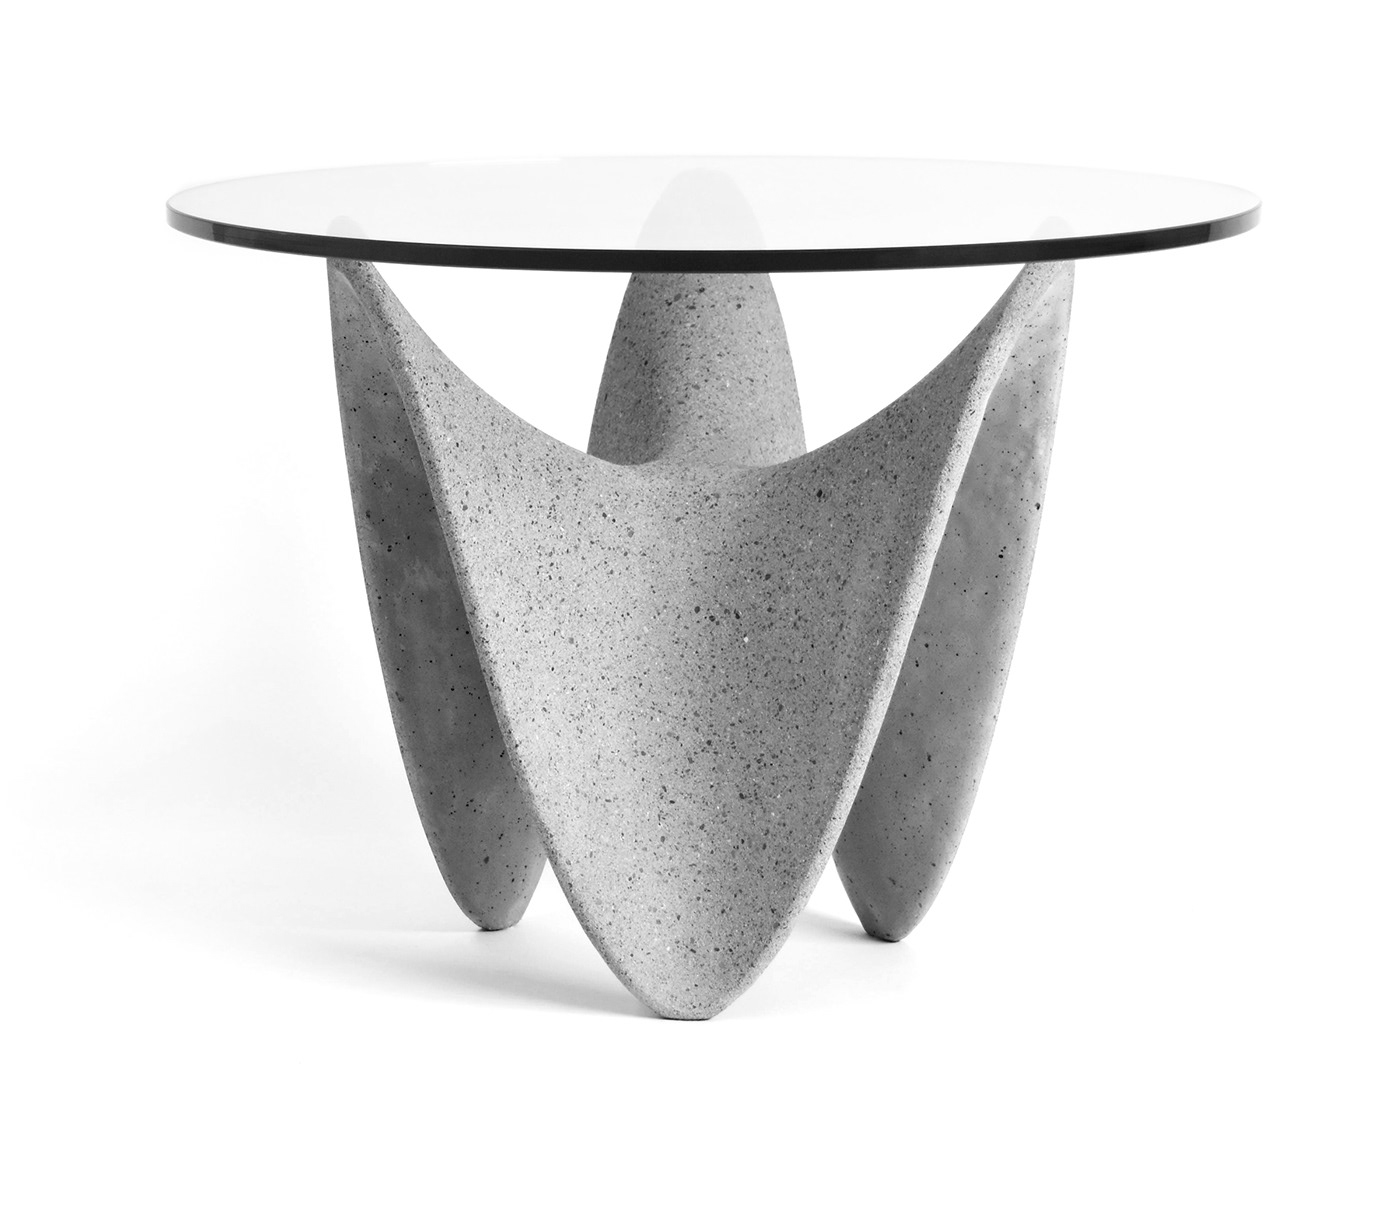 design industrialdesign furnituredesign table concrete productdesign coffeetable GFRC materials